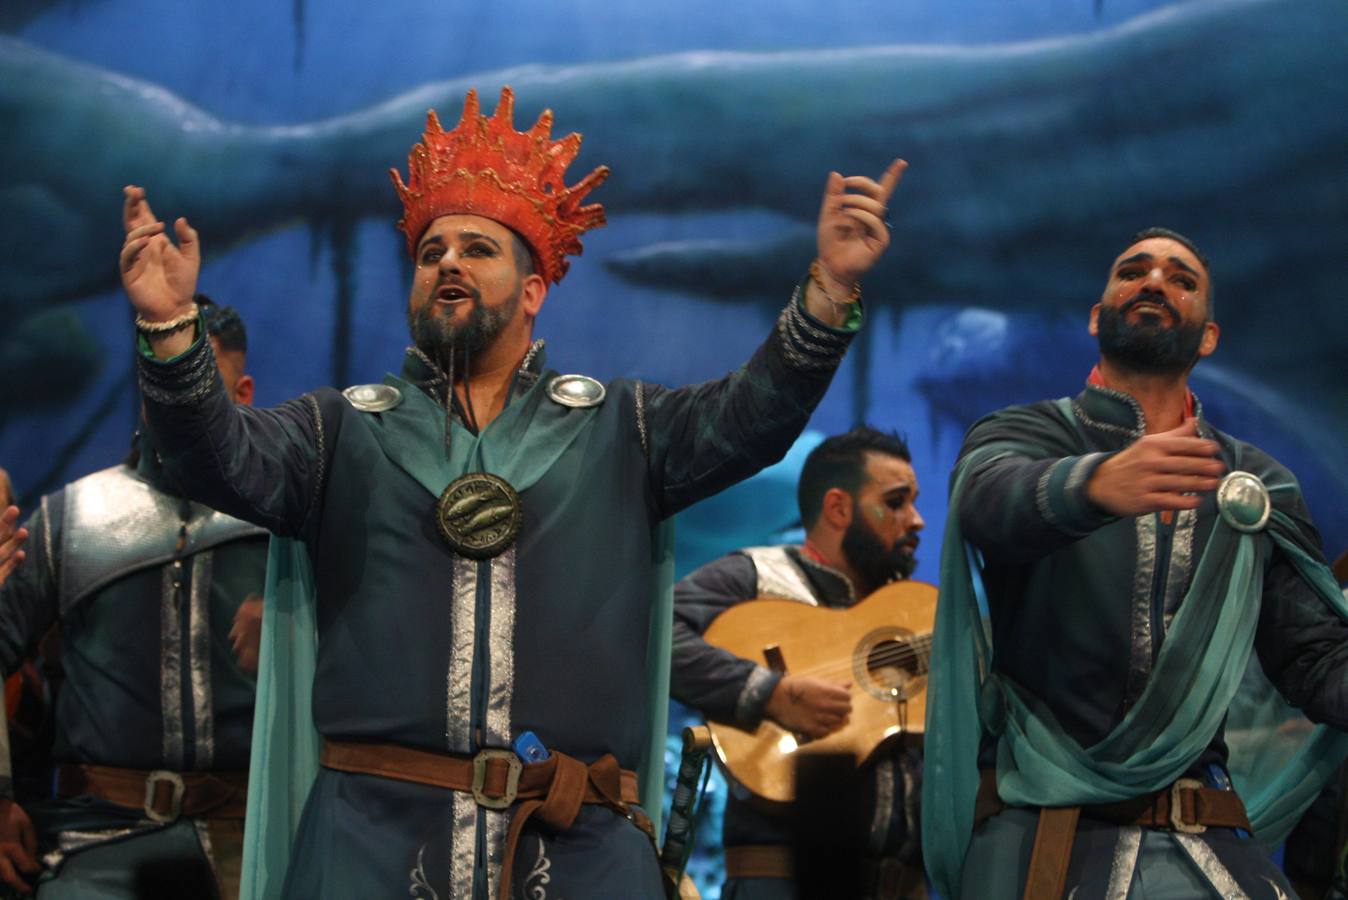 FOTOS: Comparsa Dios salve a la reina en el Carnaval de Cádiz 2018